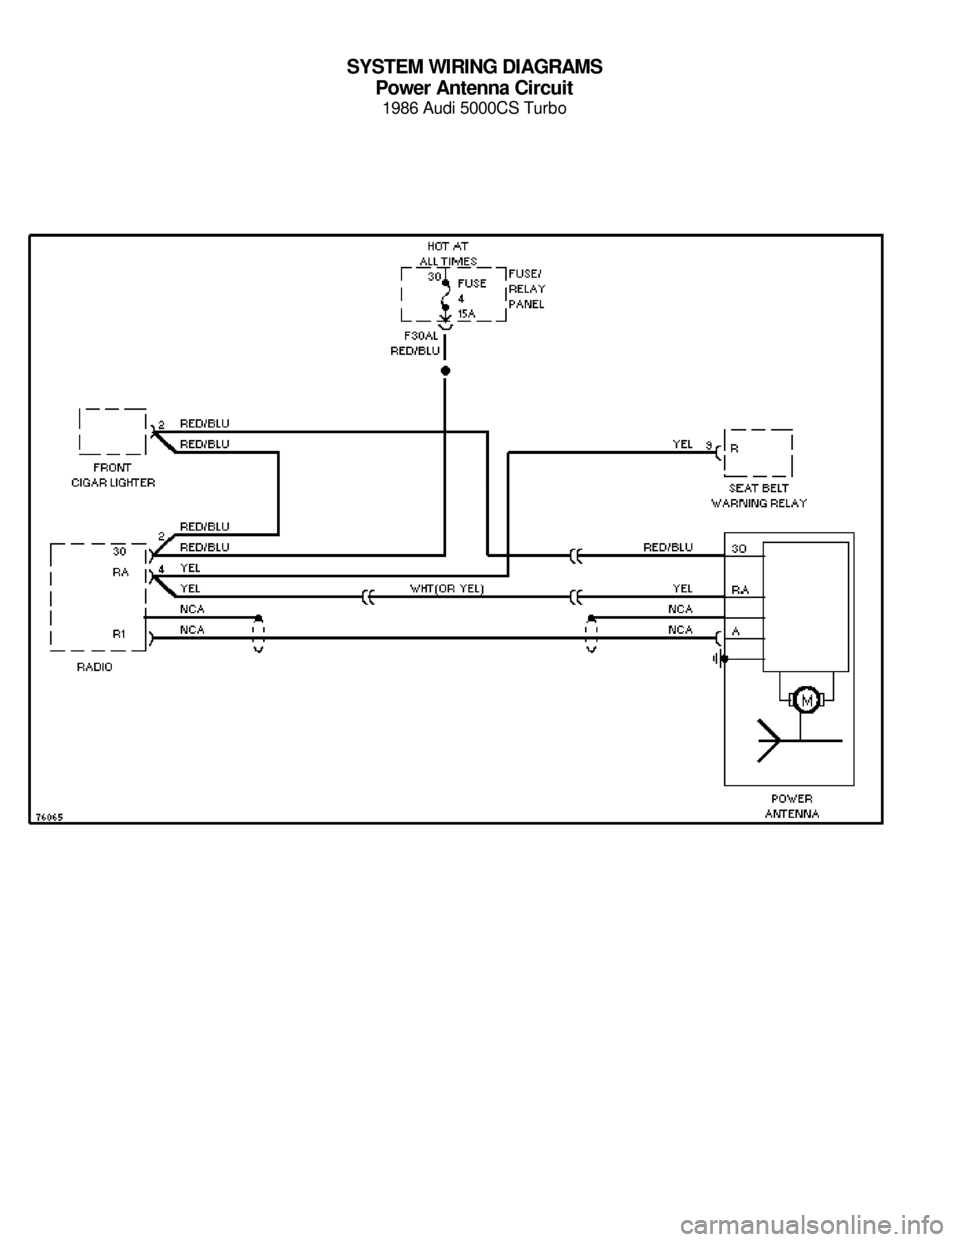 AUDI 5000CS 1986 C2 System Wiring Diagram SYSTEM WIRING DIAGRAMS
Power Antenna Circuit
1986 Audi 5000CS Turbo
For x    
Copyright © 1998 Mitchell Repair Information Company, LLCMonday, July 19, 2004  05:52PM 